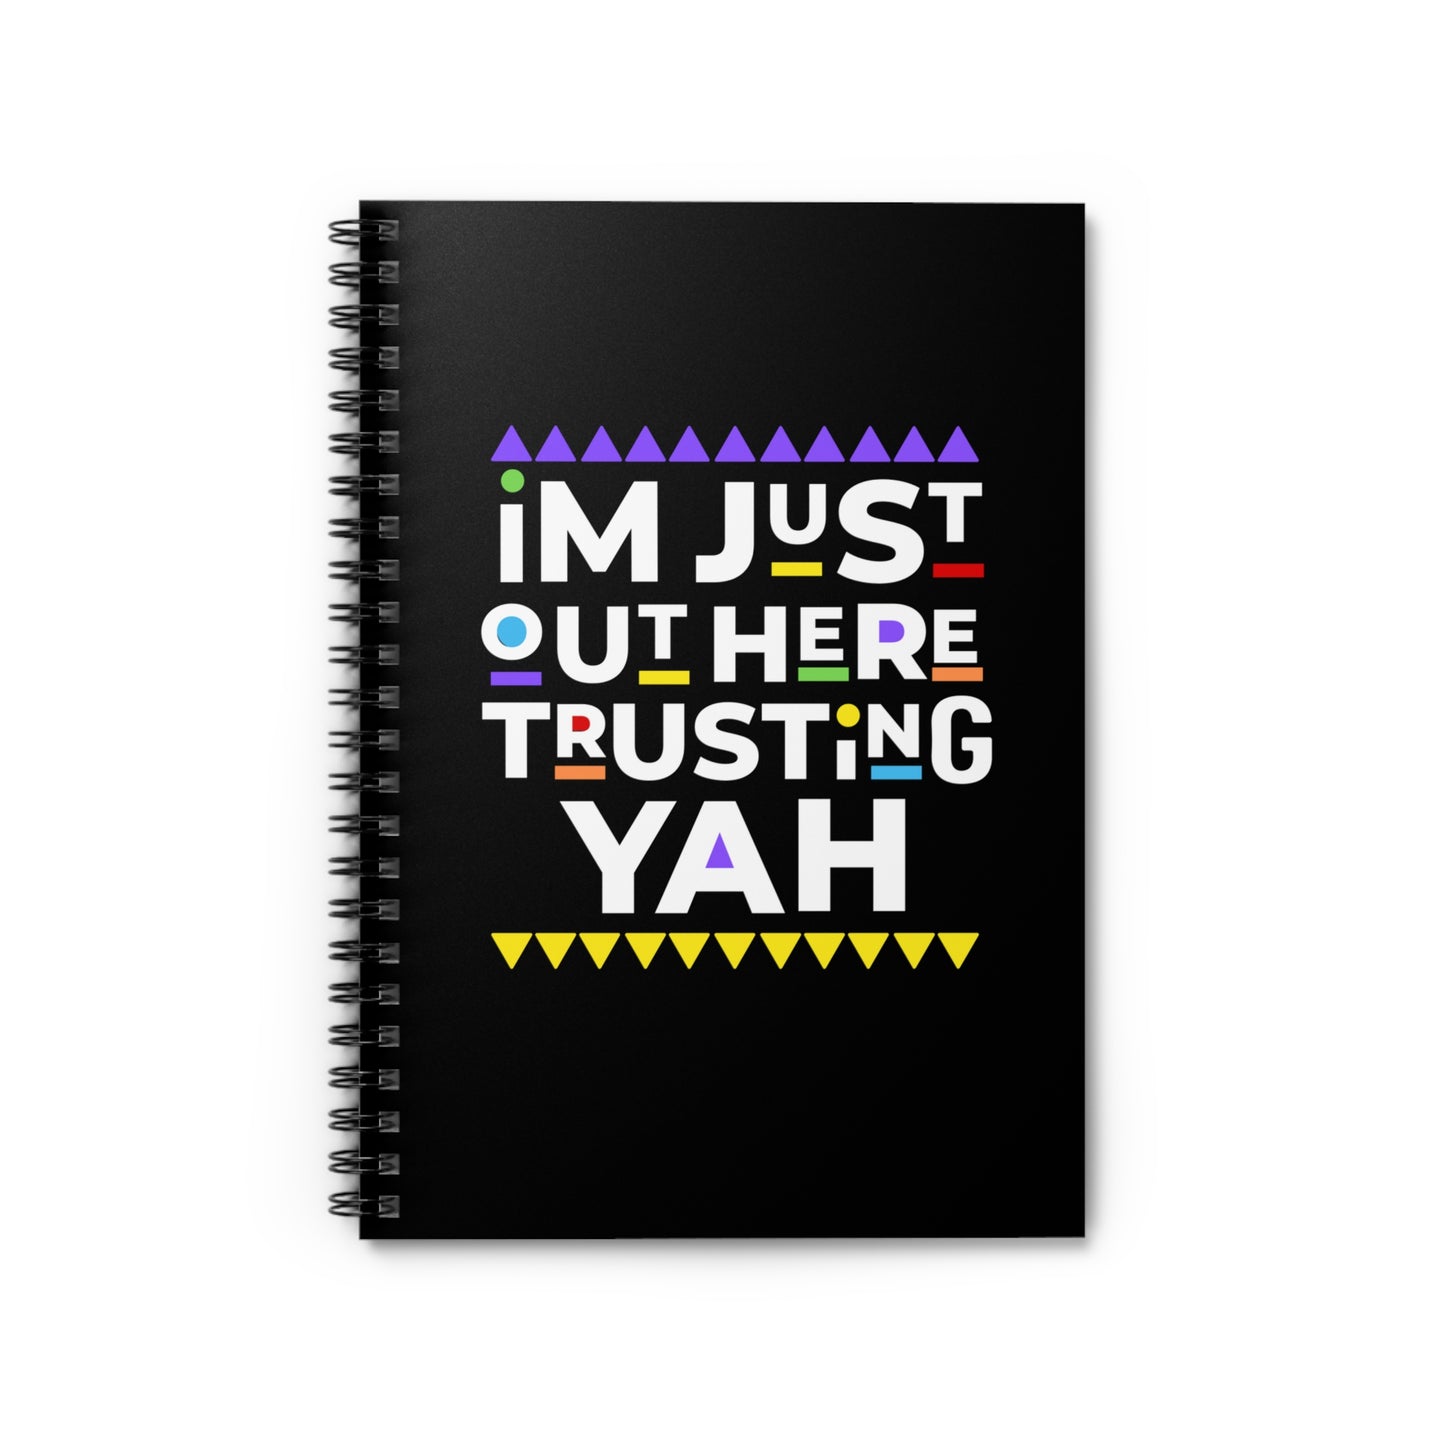 I AM JUST TRUSTING YAH Spiral Journal/Notebook - Ruled Line